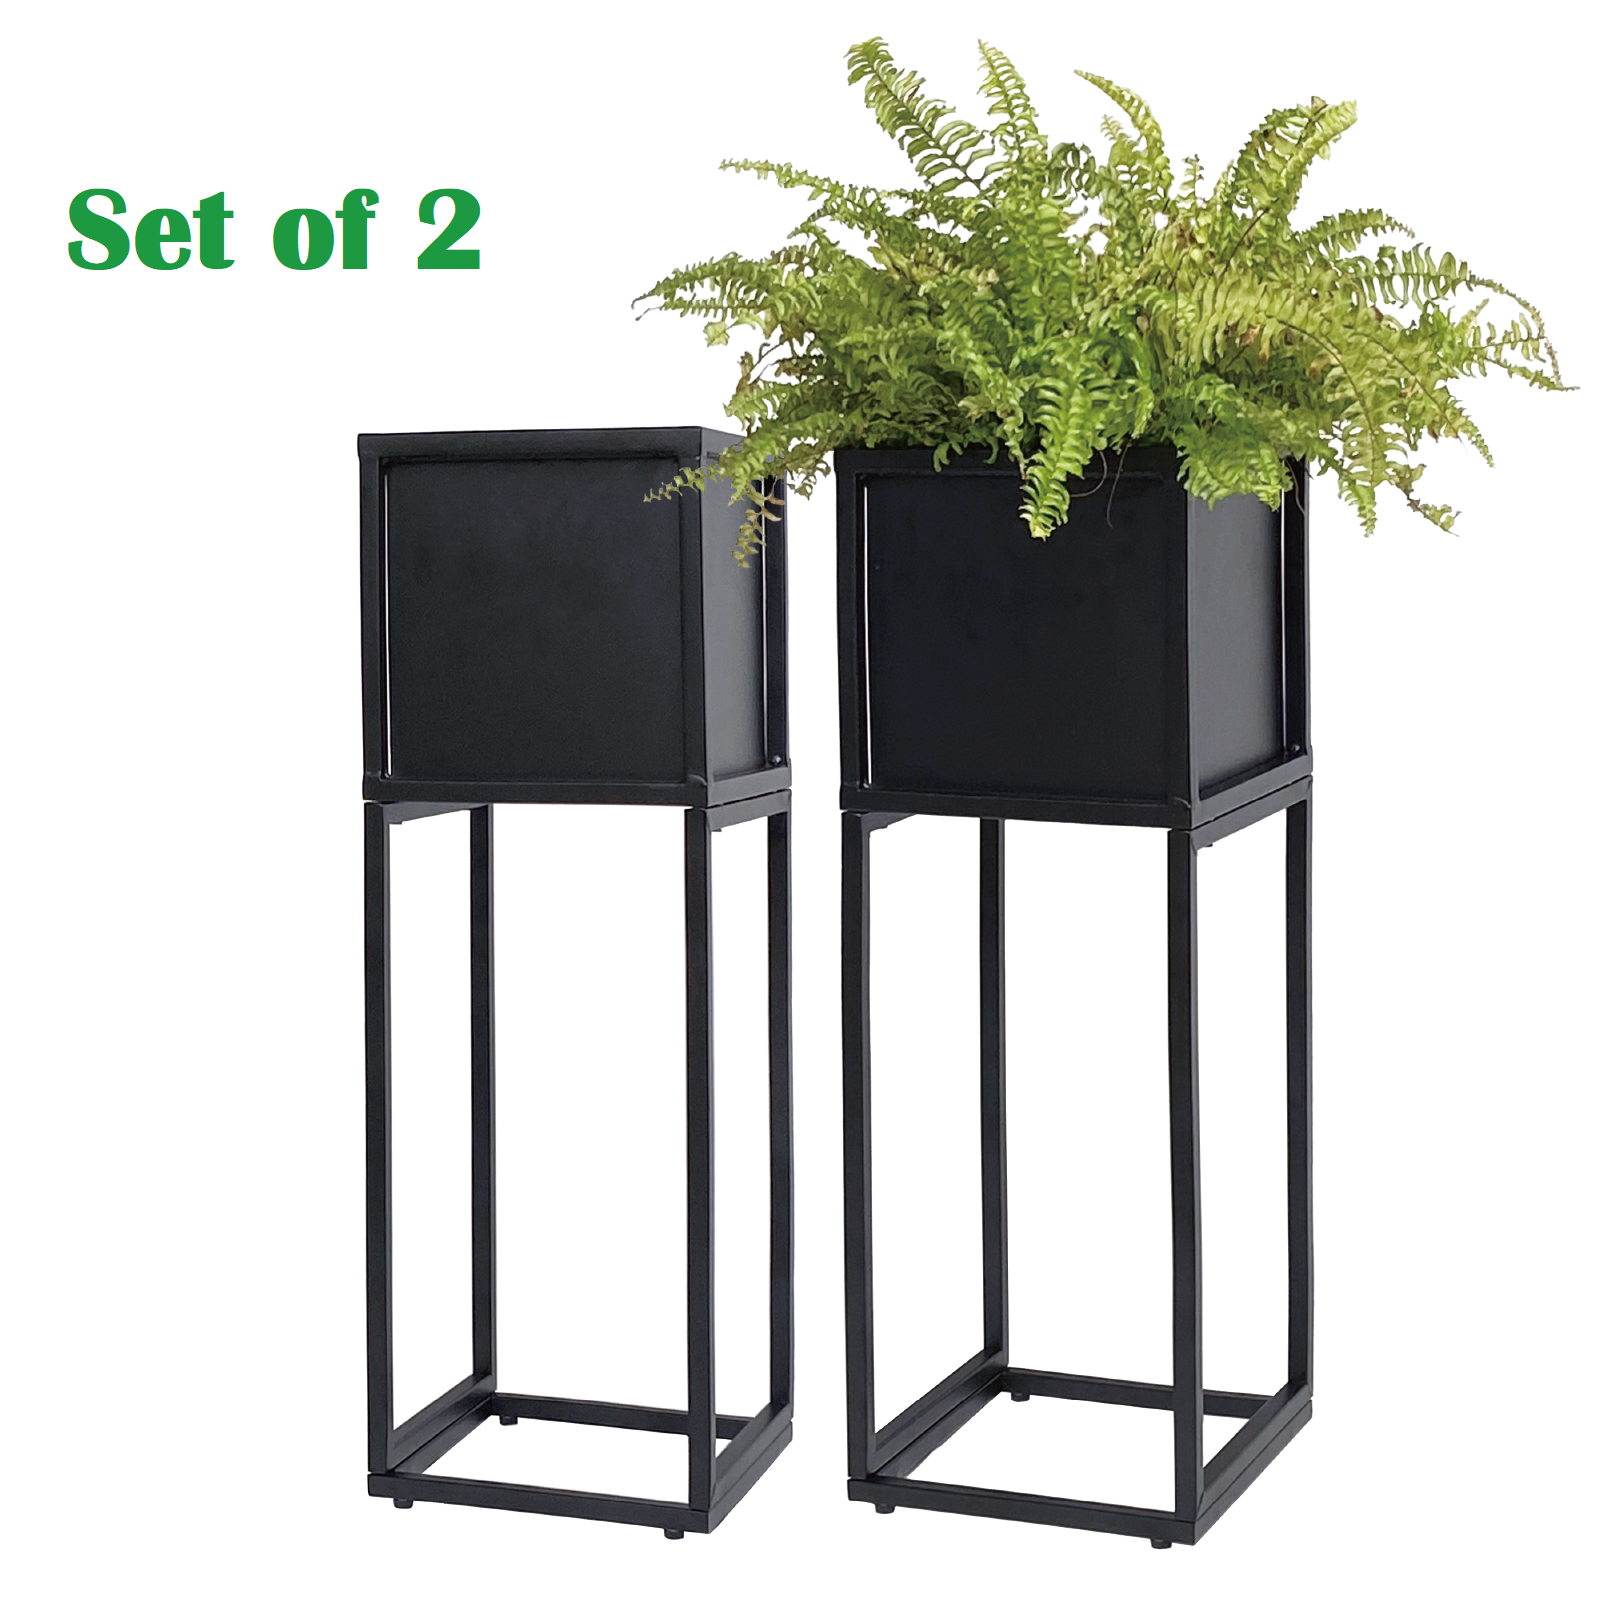 23.6 Industrial Style Metal Planter Box, Set of 2, Black